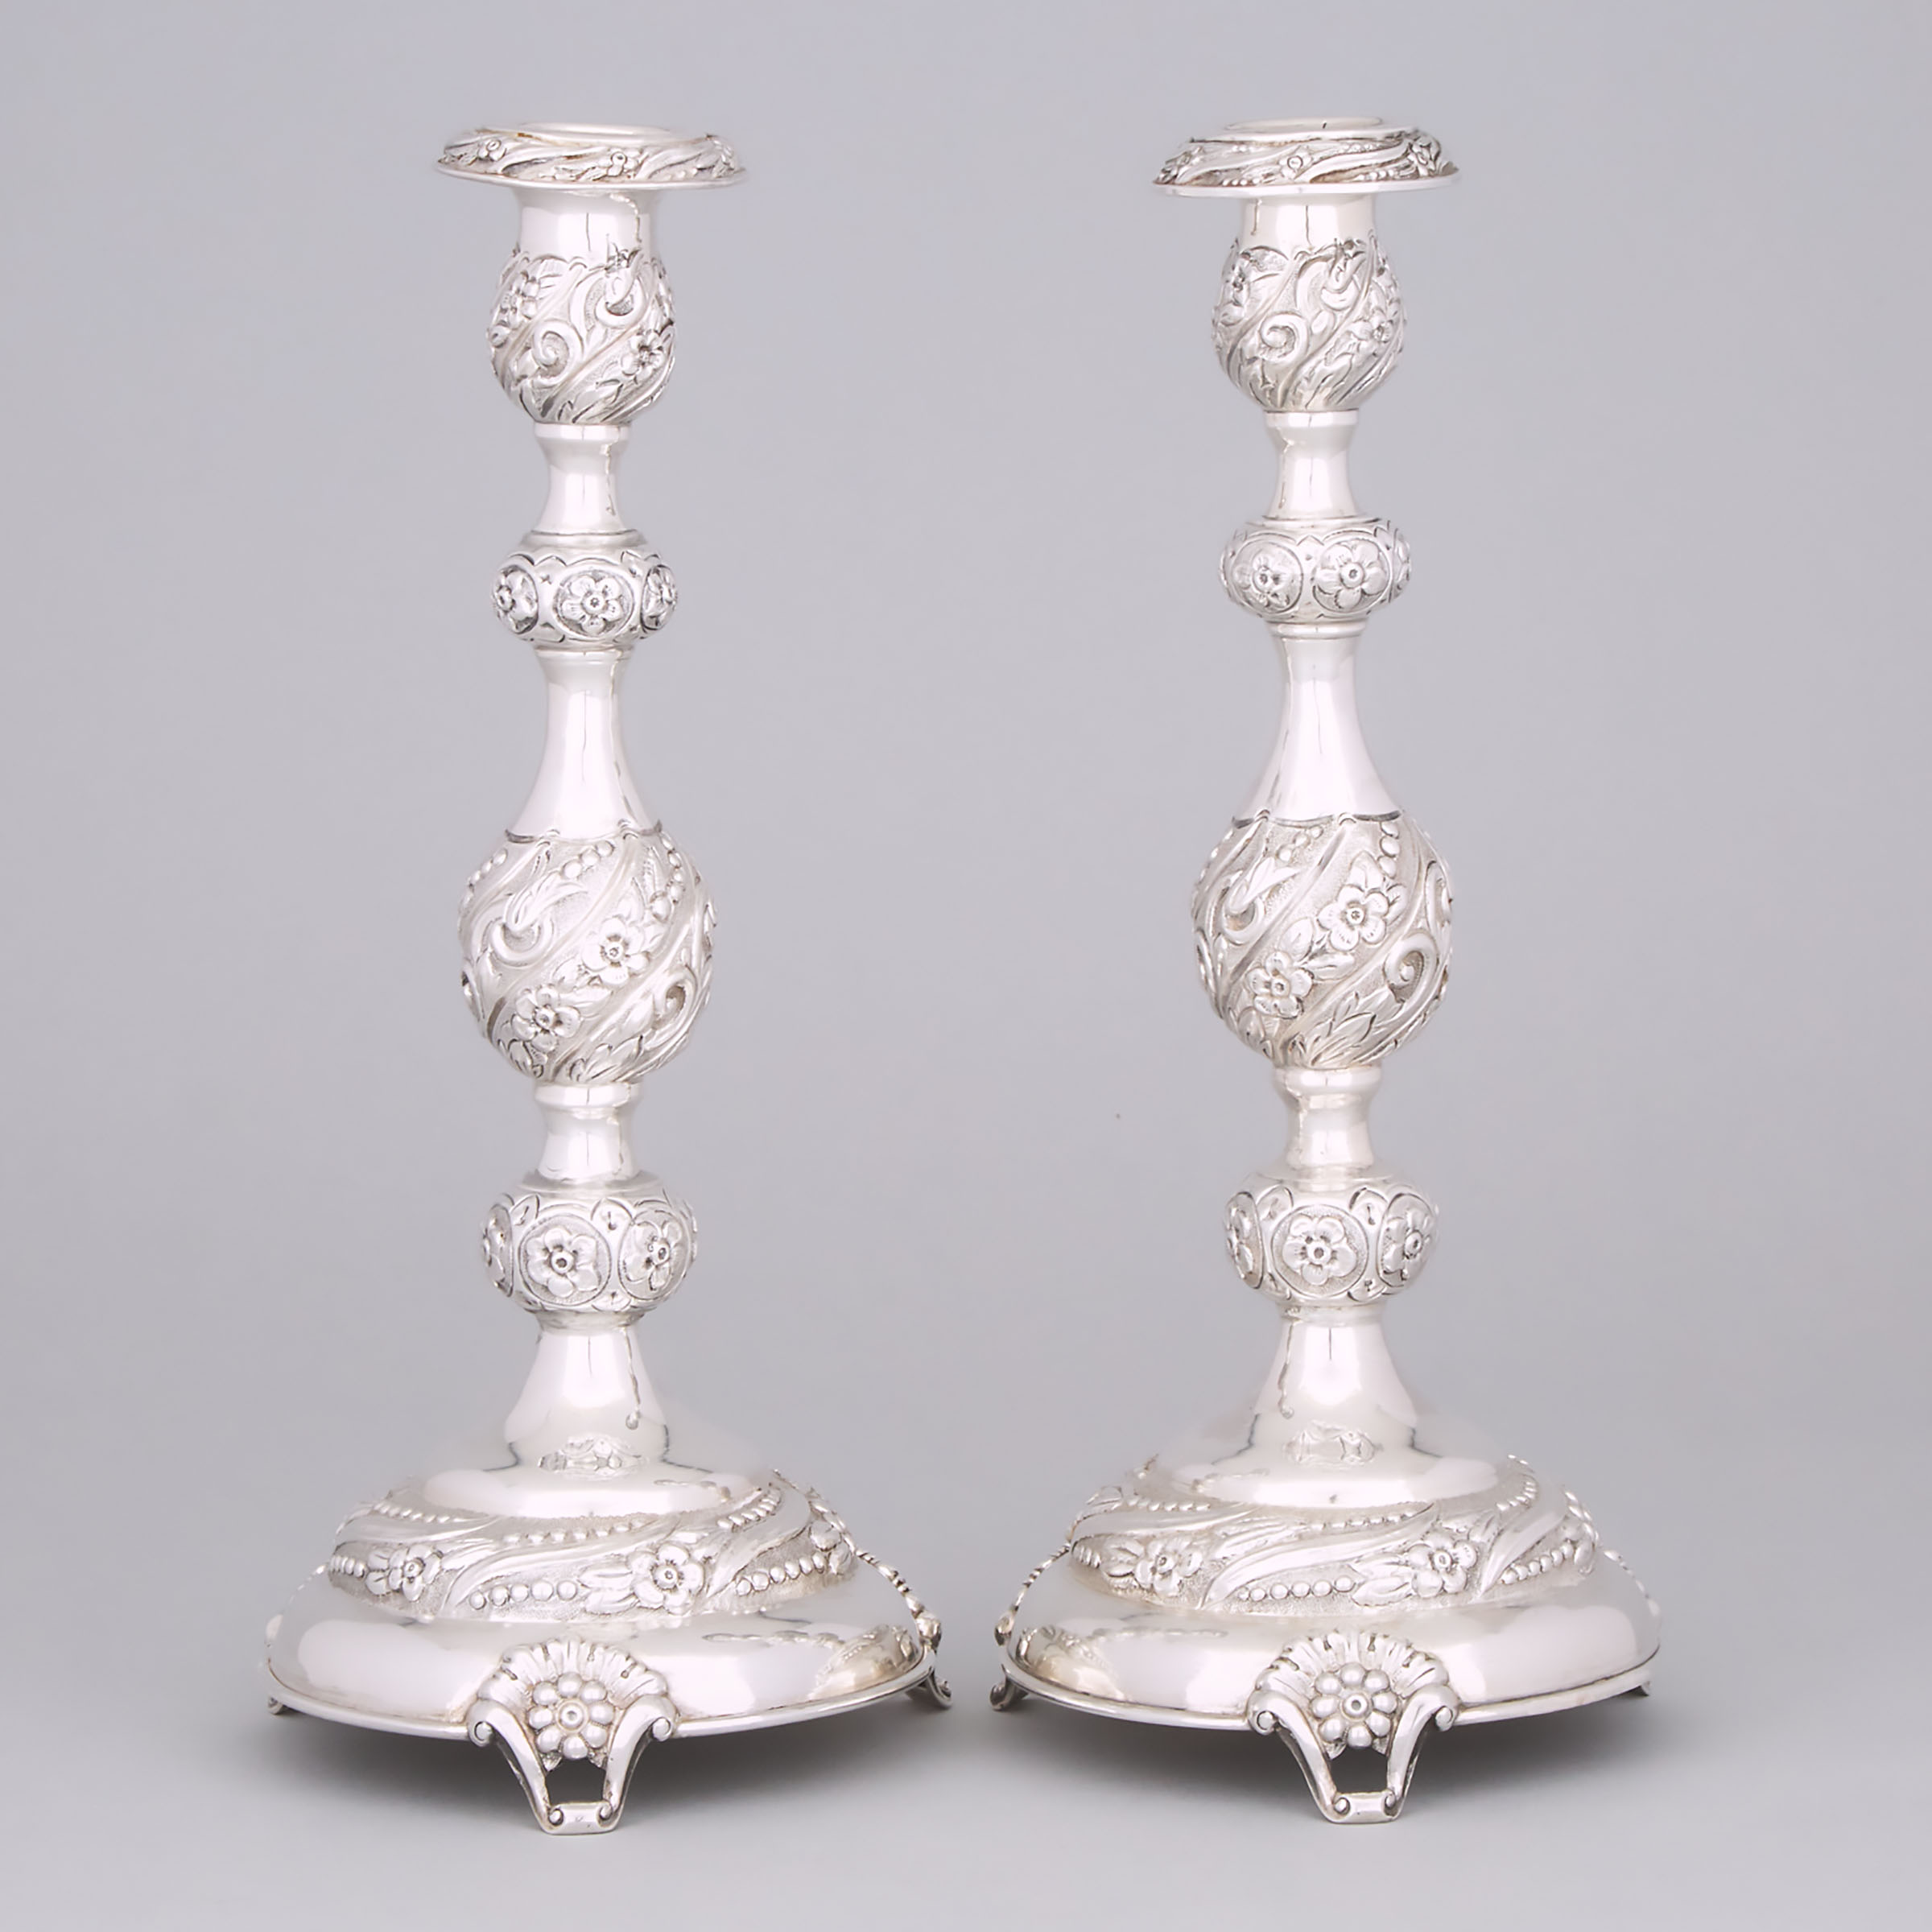 Pair of Edwardian Silver Table Candlesticks, Jacob Fenigstein, London, 1904